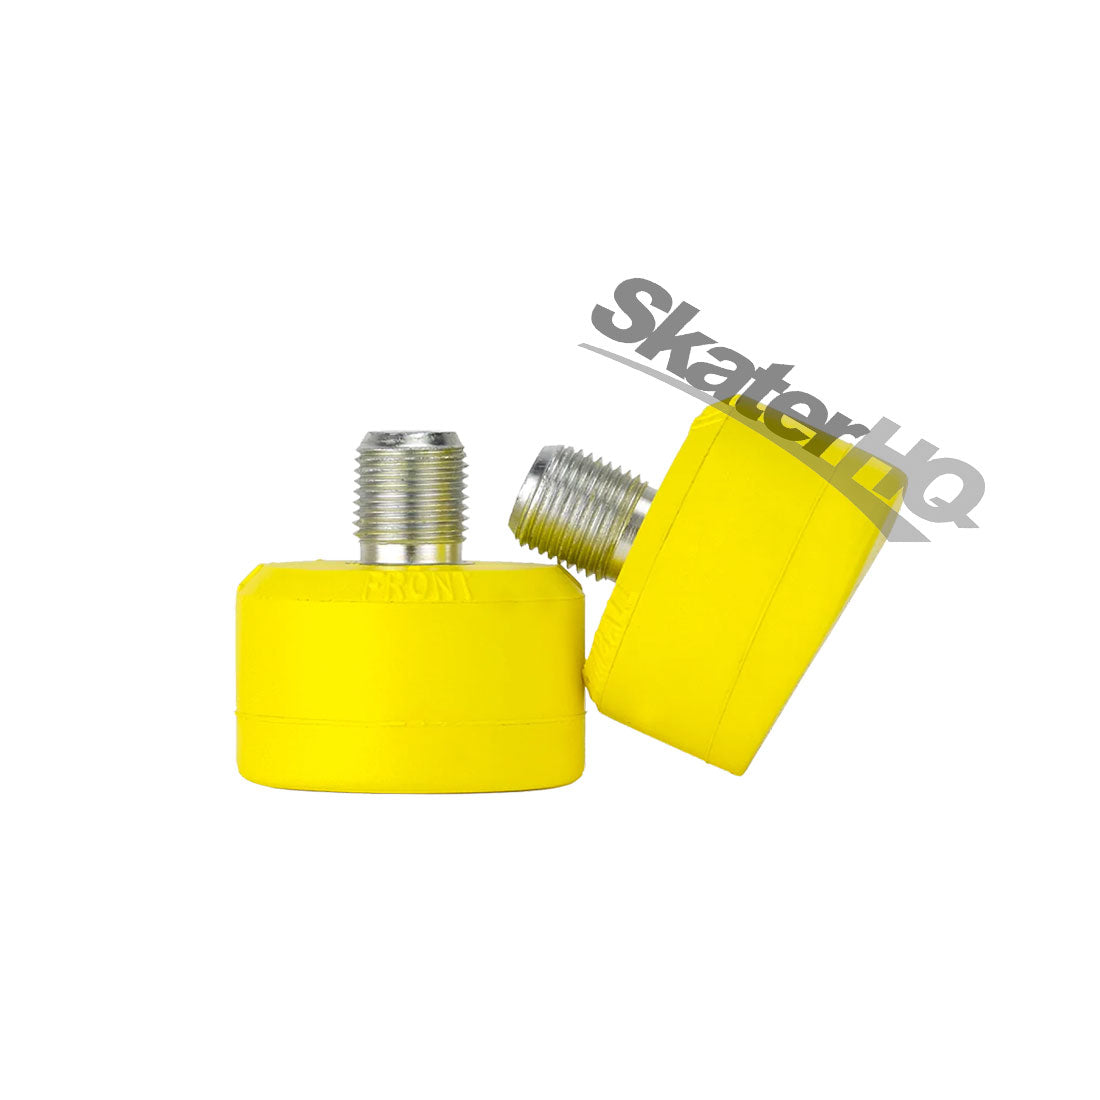 Gumball Toe Stops - Short Stem - Lemon 75A Roller Skate Hardware and Parts